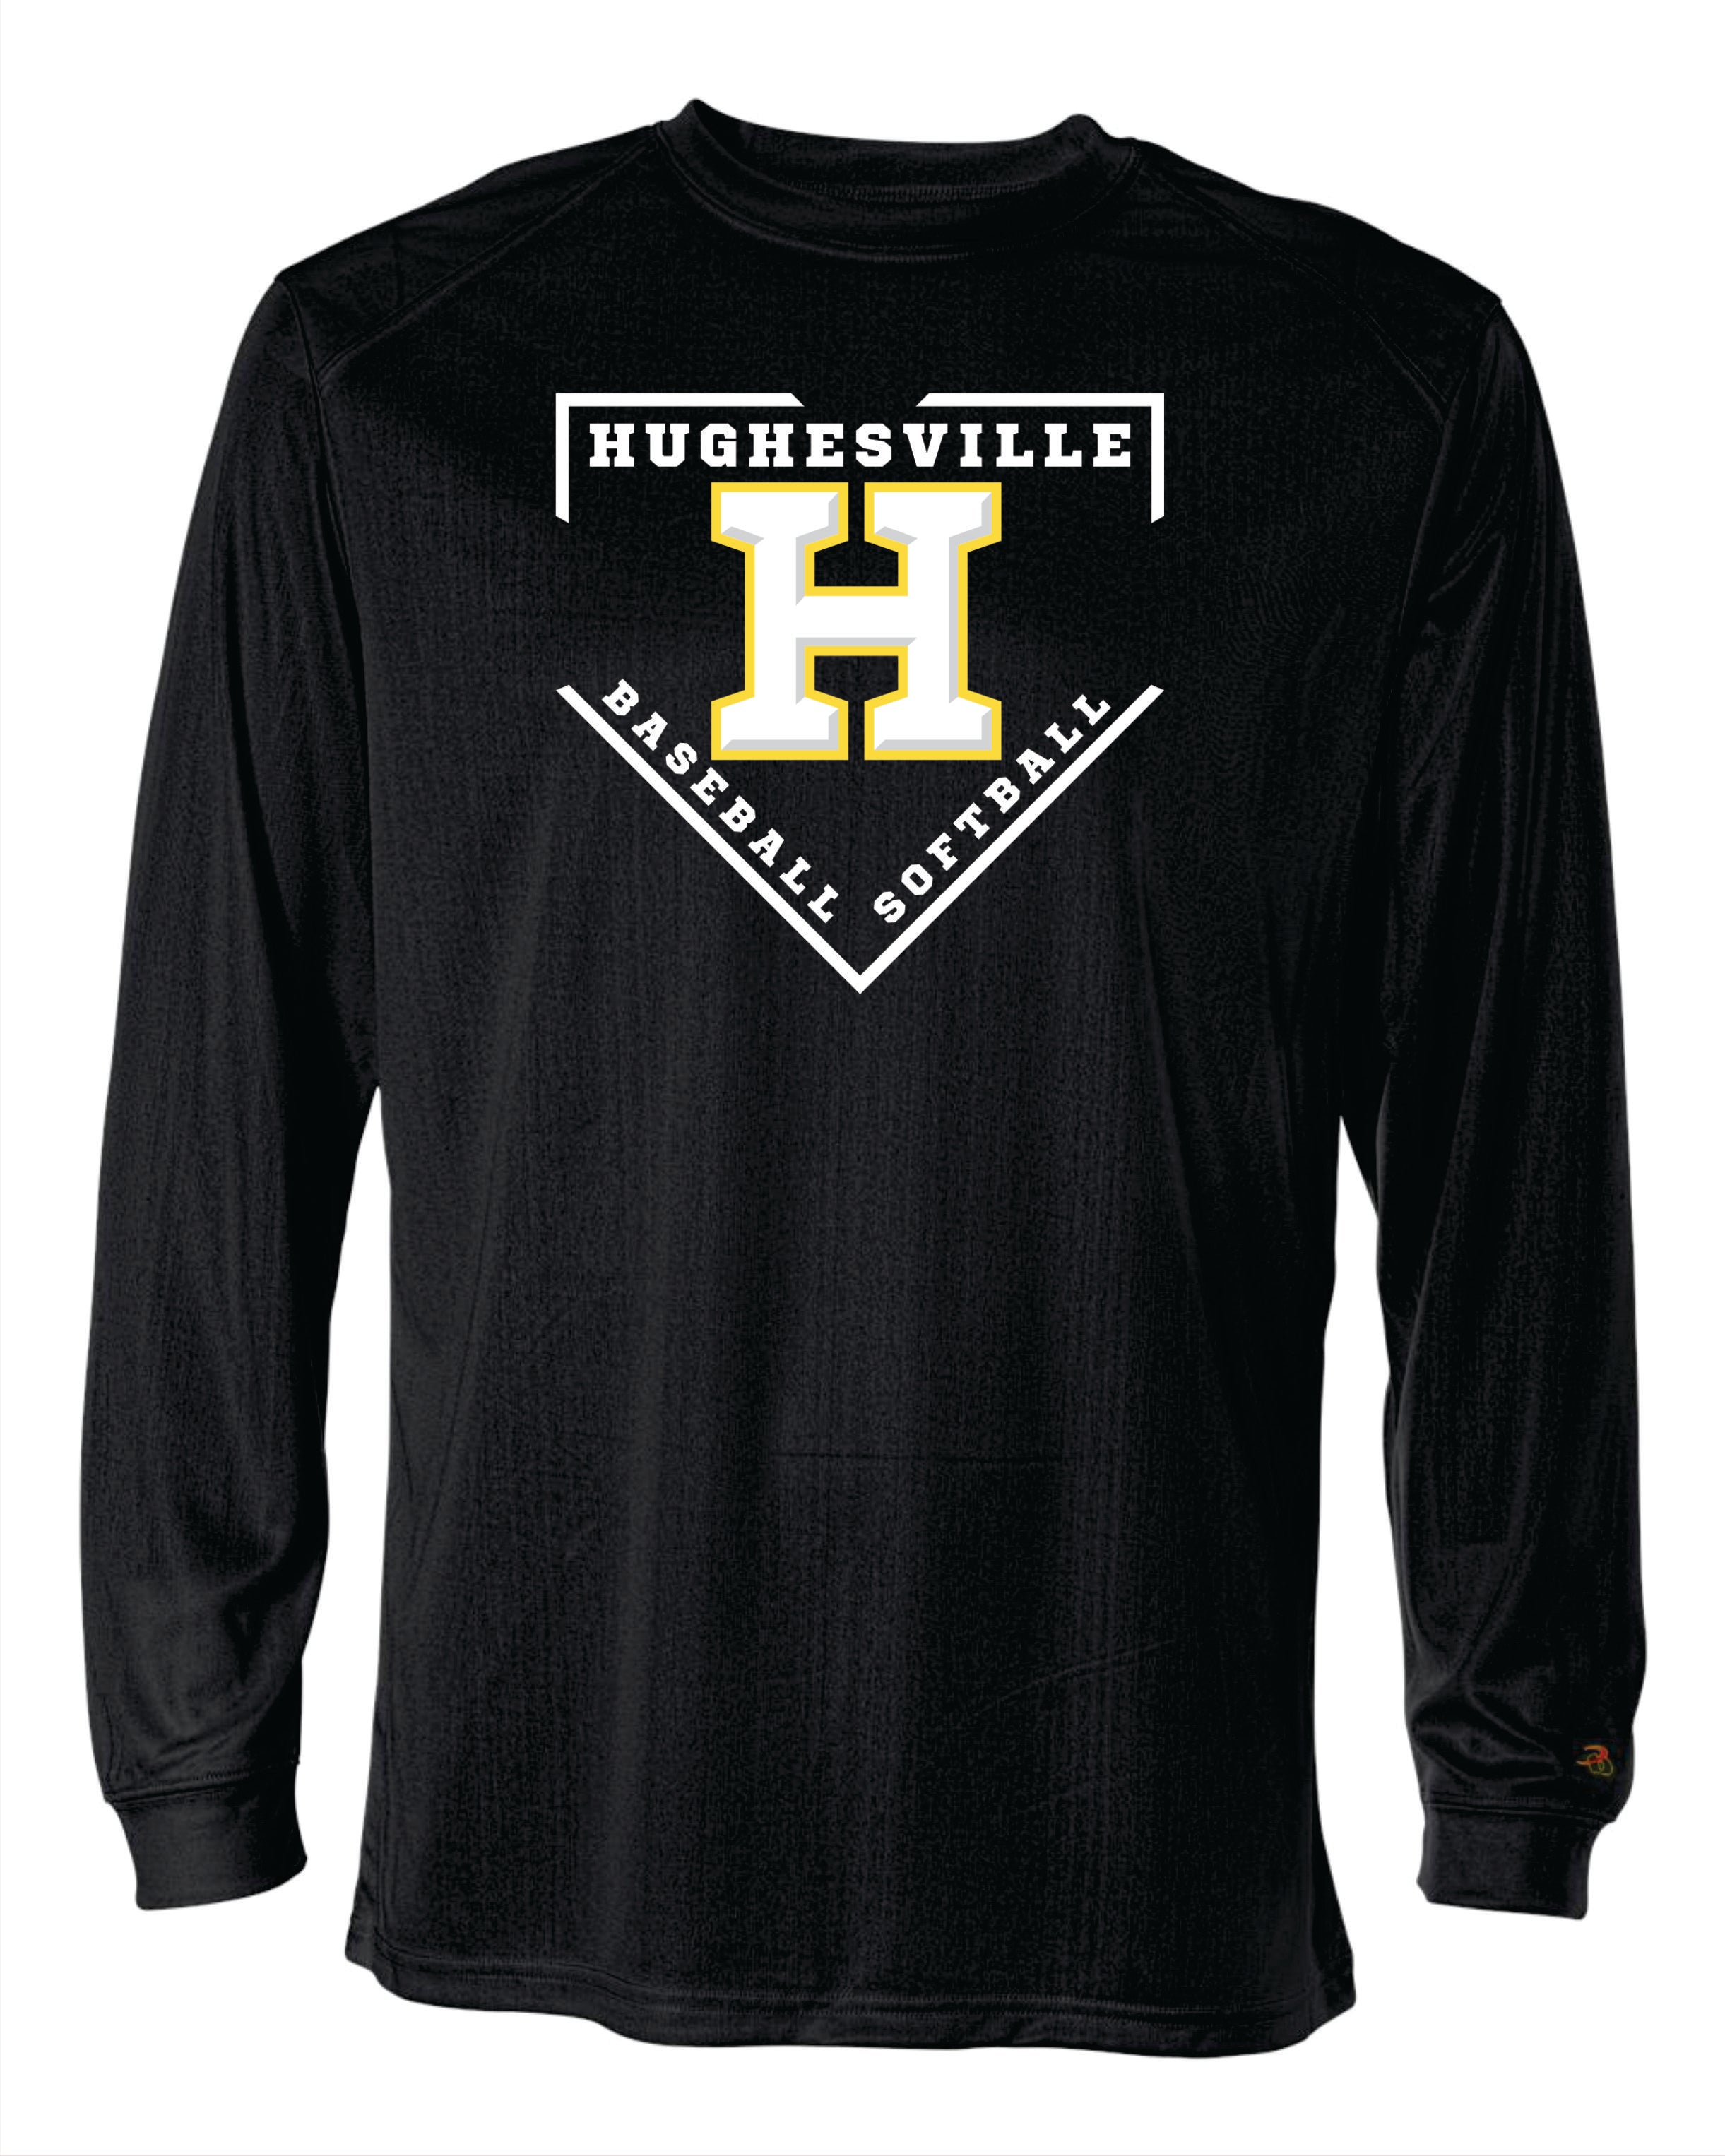 Hughesville LL Long Sleeve Badger Dri Fit Shirt Adult